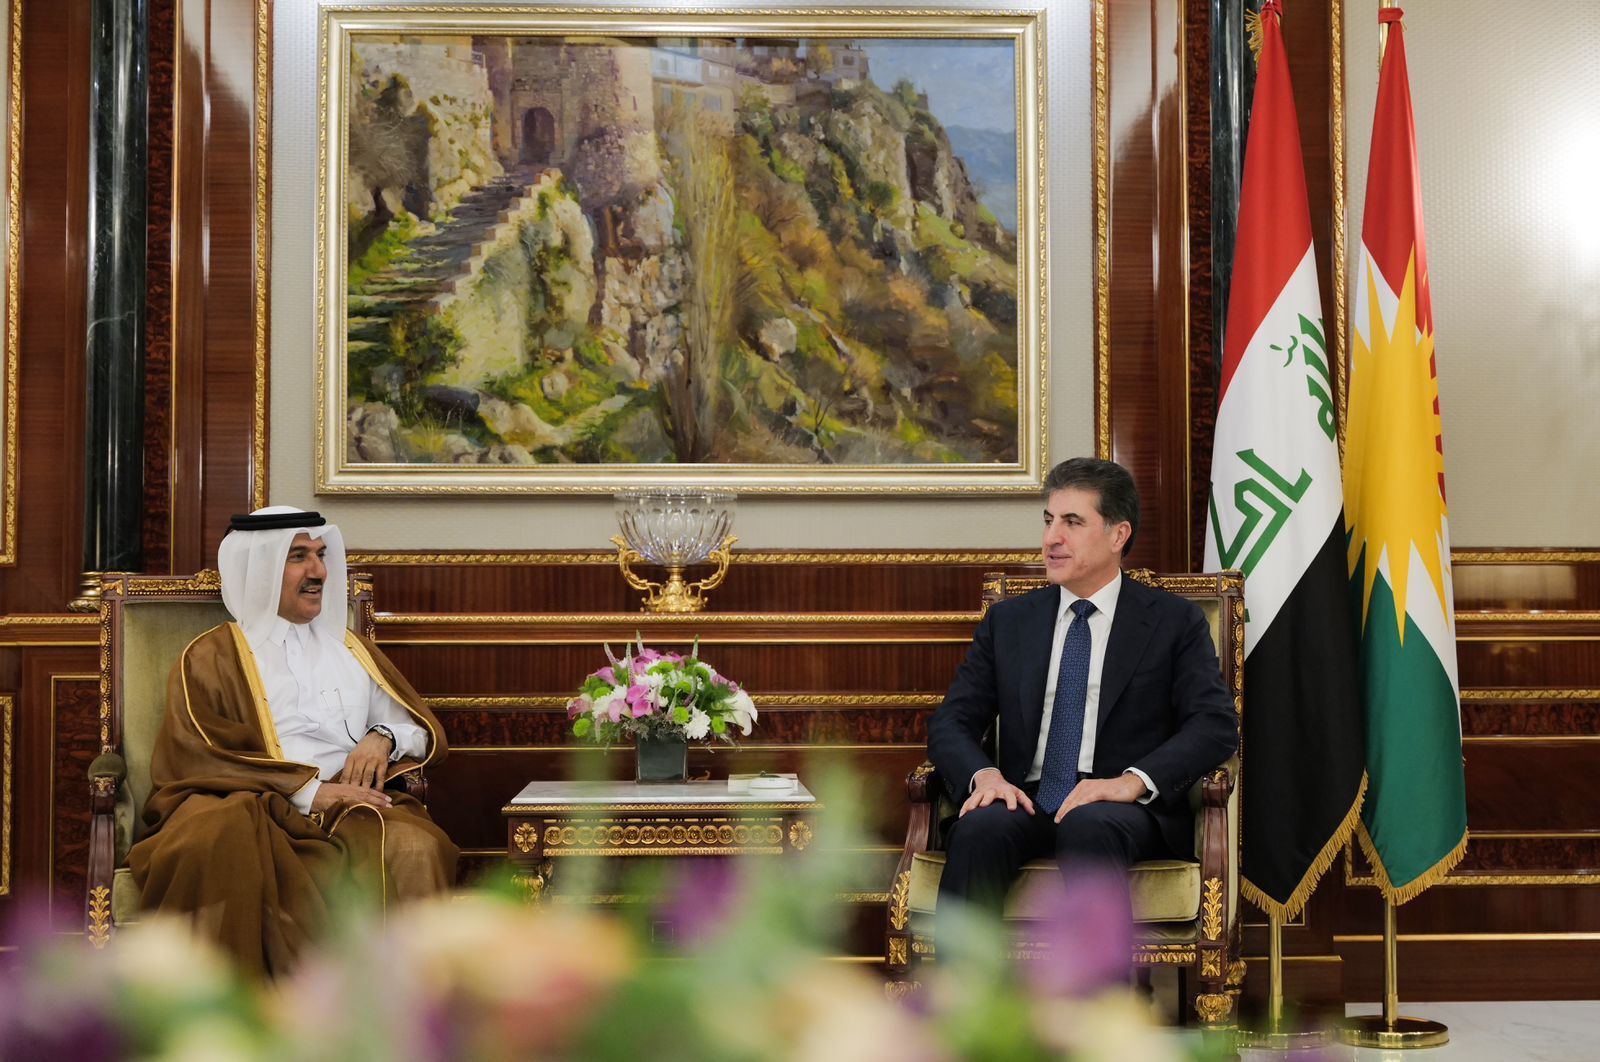 President Barzani discusses investments with senior Qatari diplomat